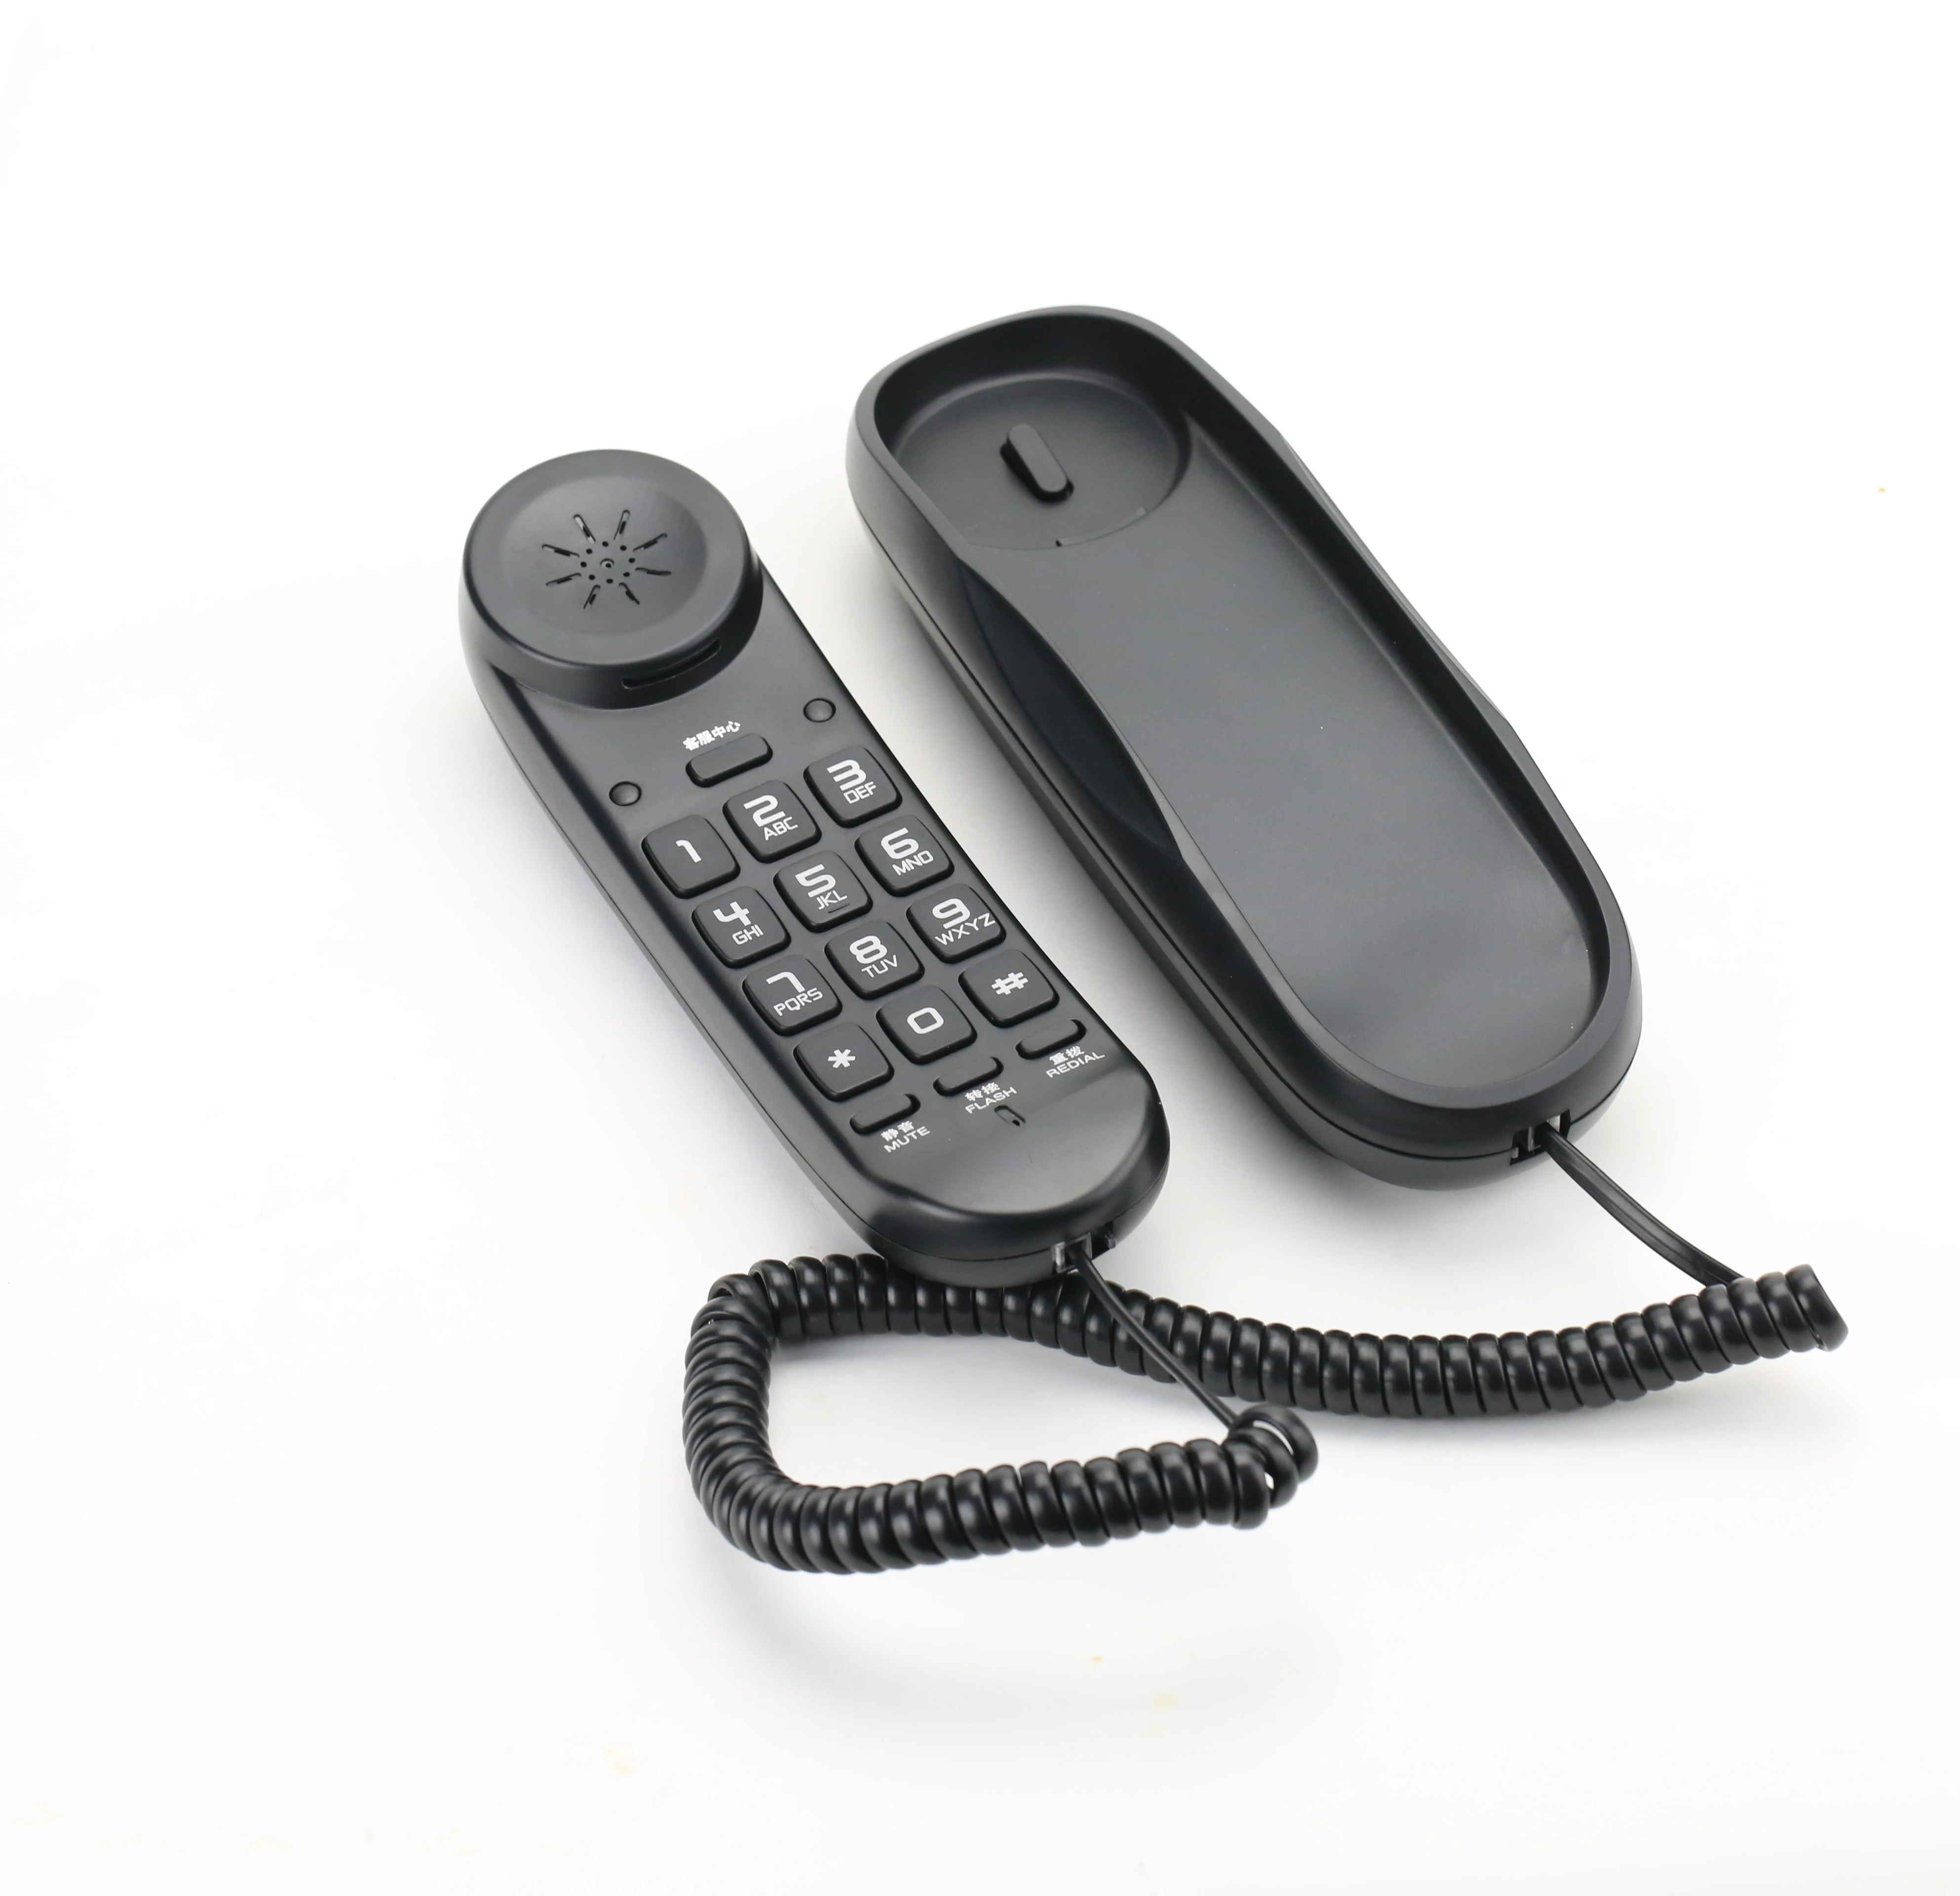 ESN-5 basic phone bath room phone corded basic telephone  office telephone home telephone